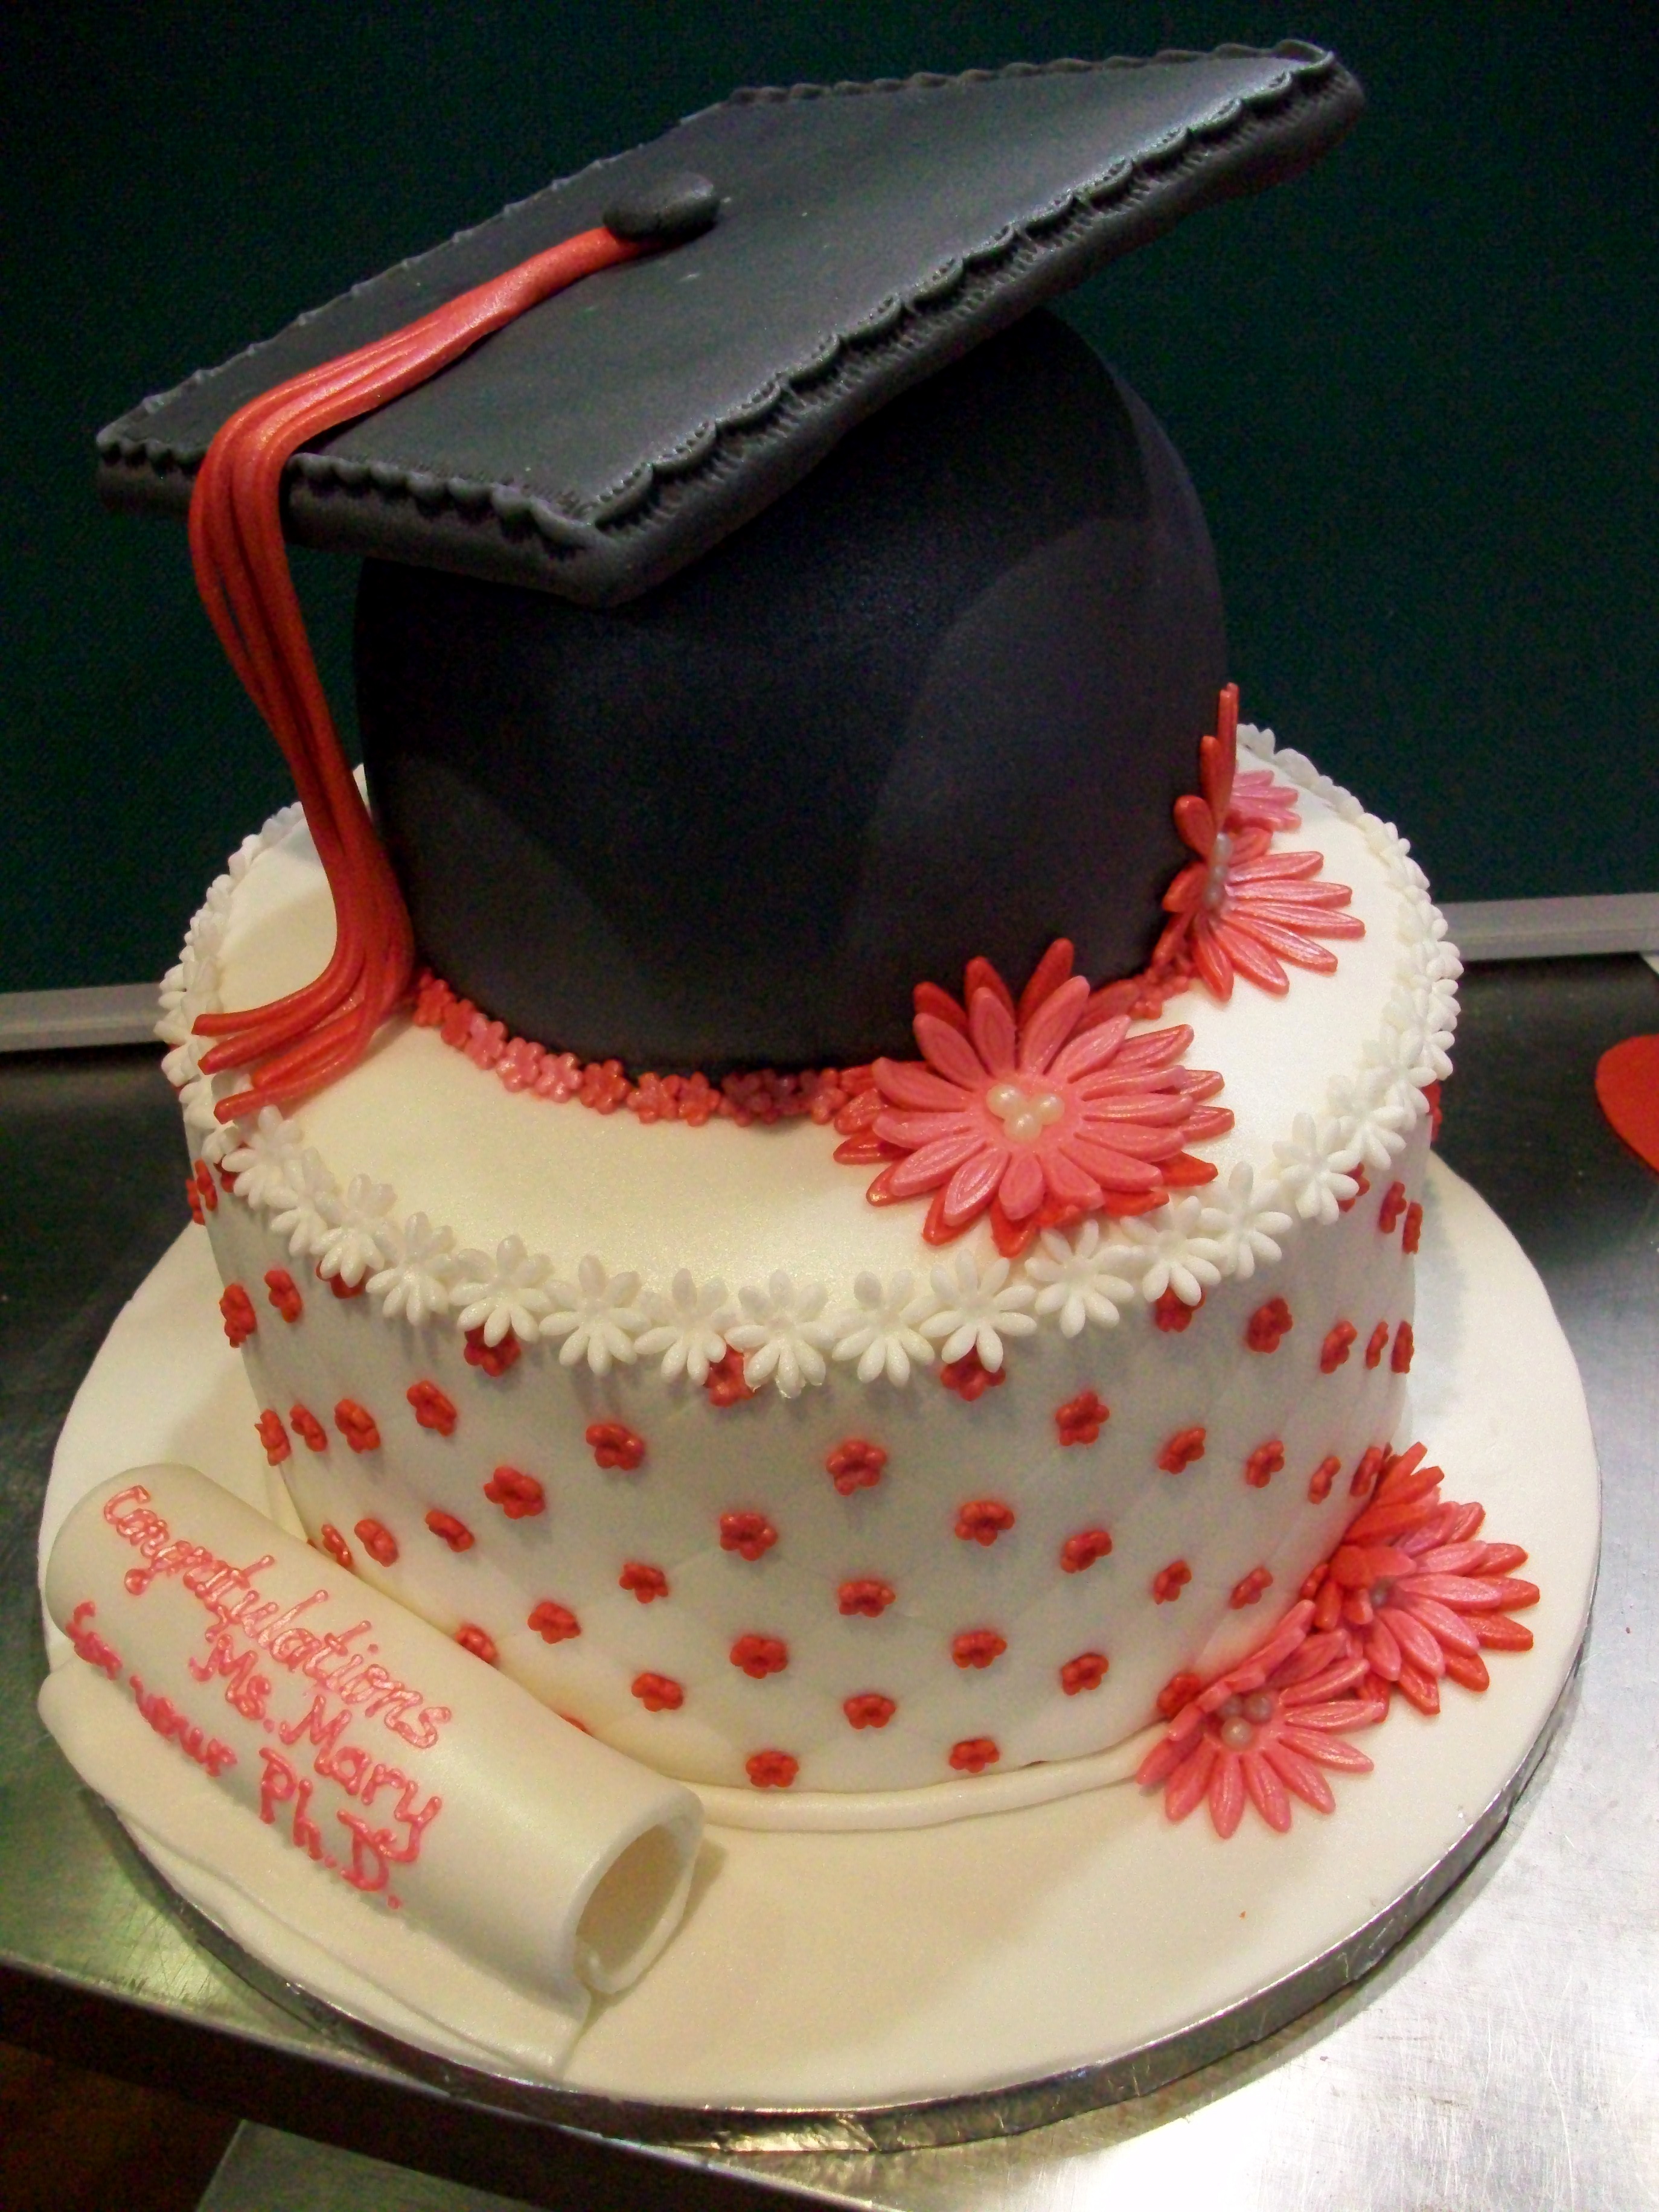 graduation cake cakes birthday decoration celebrate solopress fun latest gcses flowery littlebcakes classic